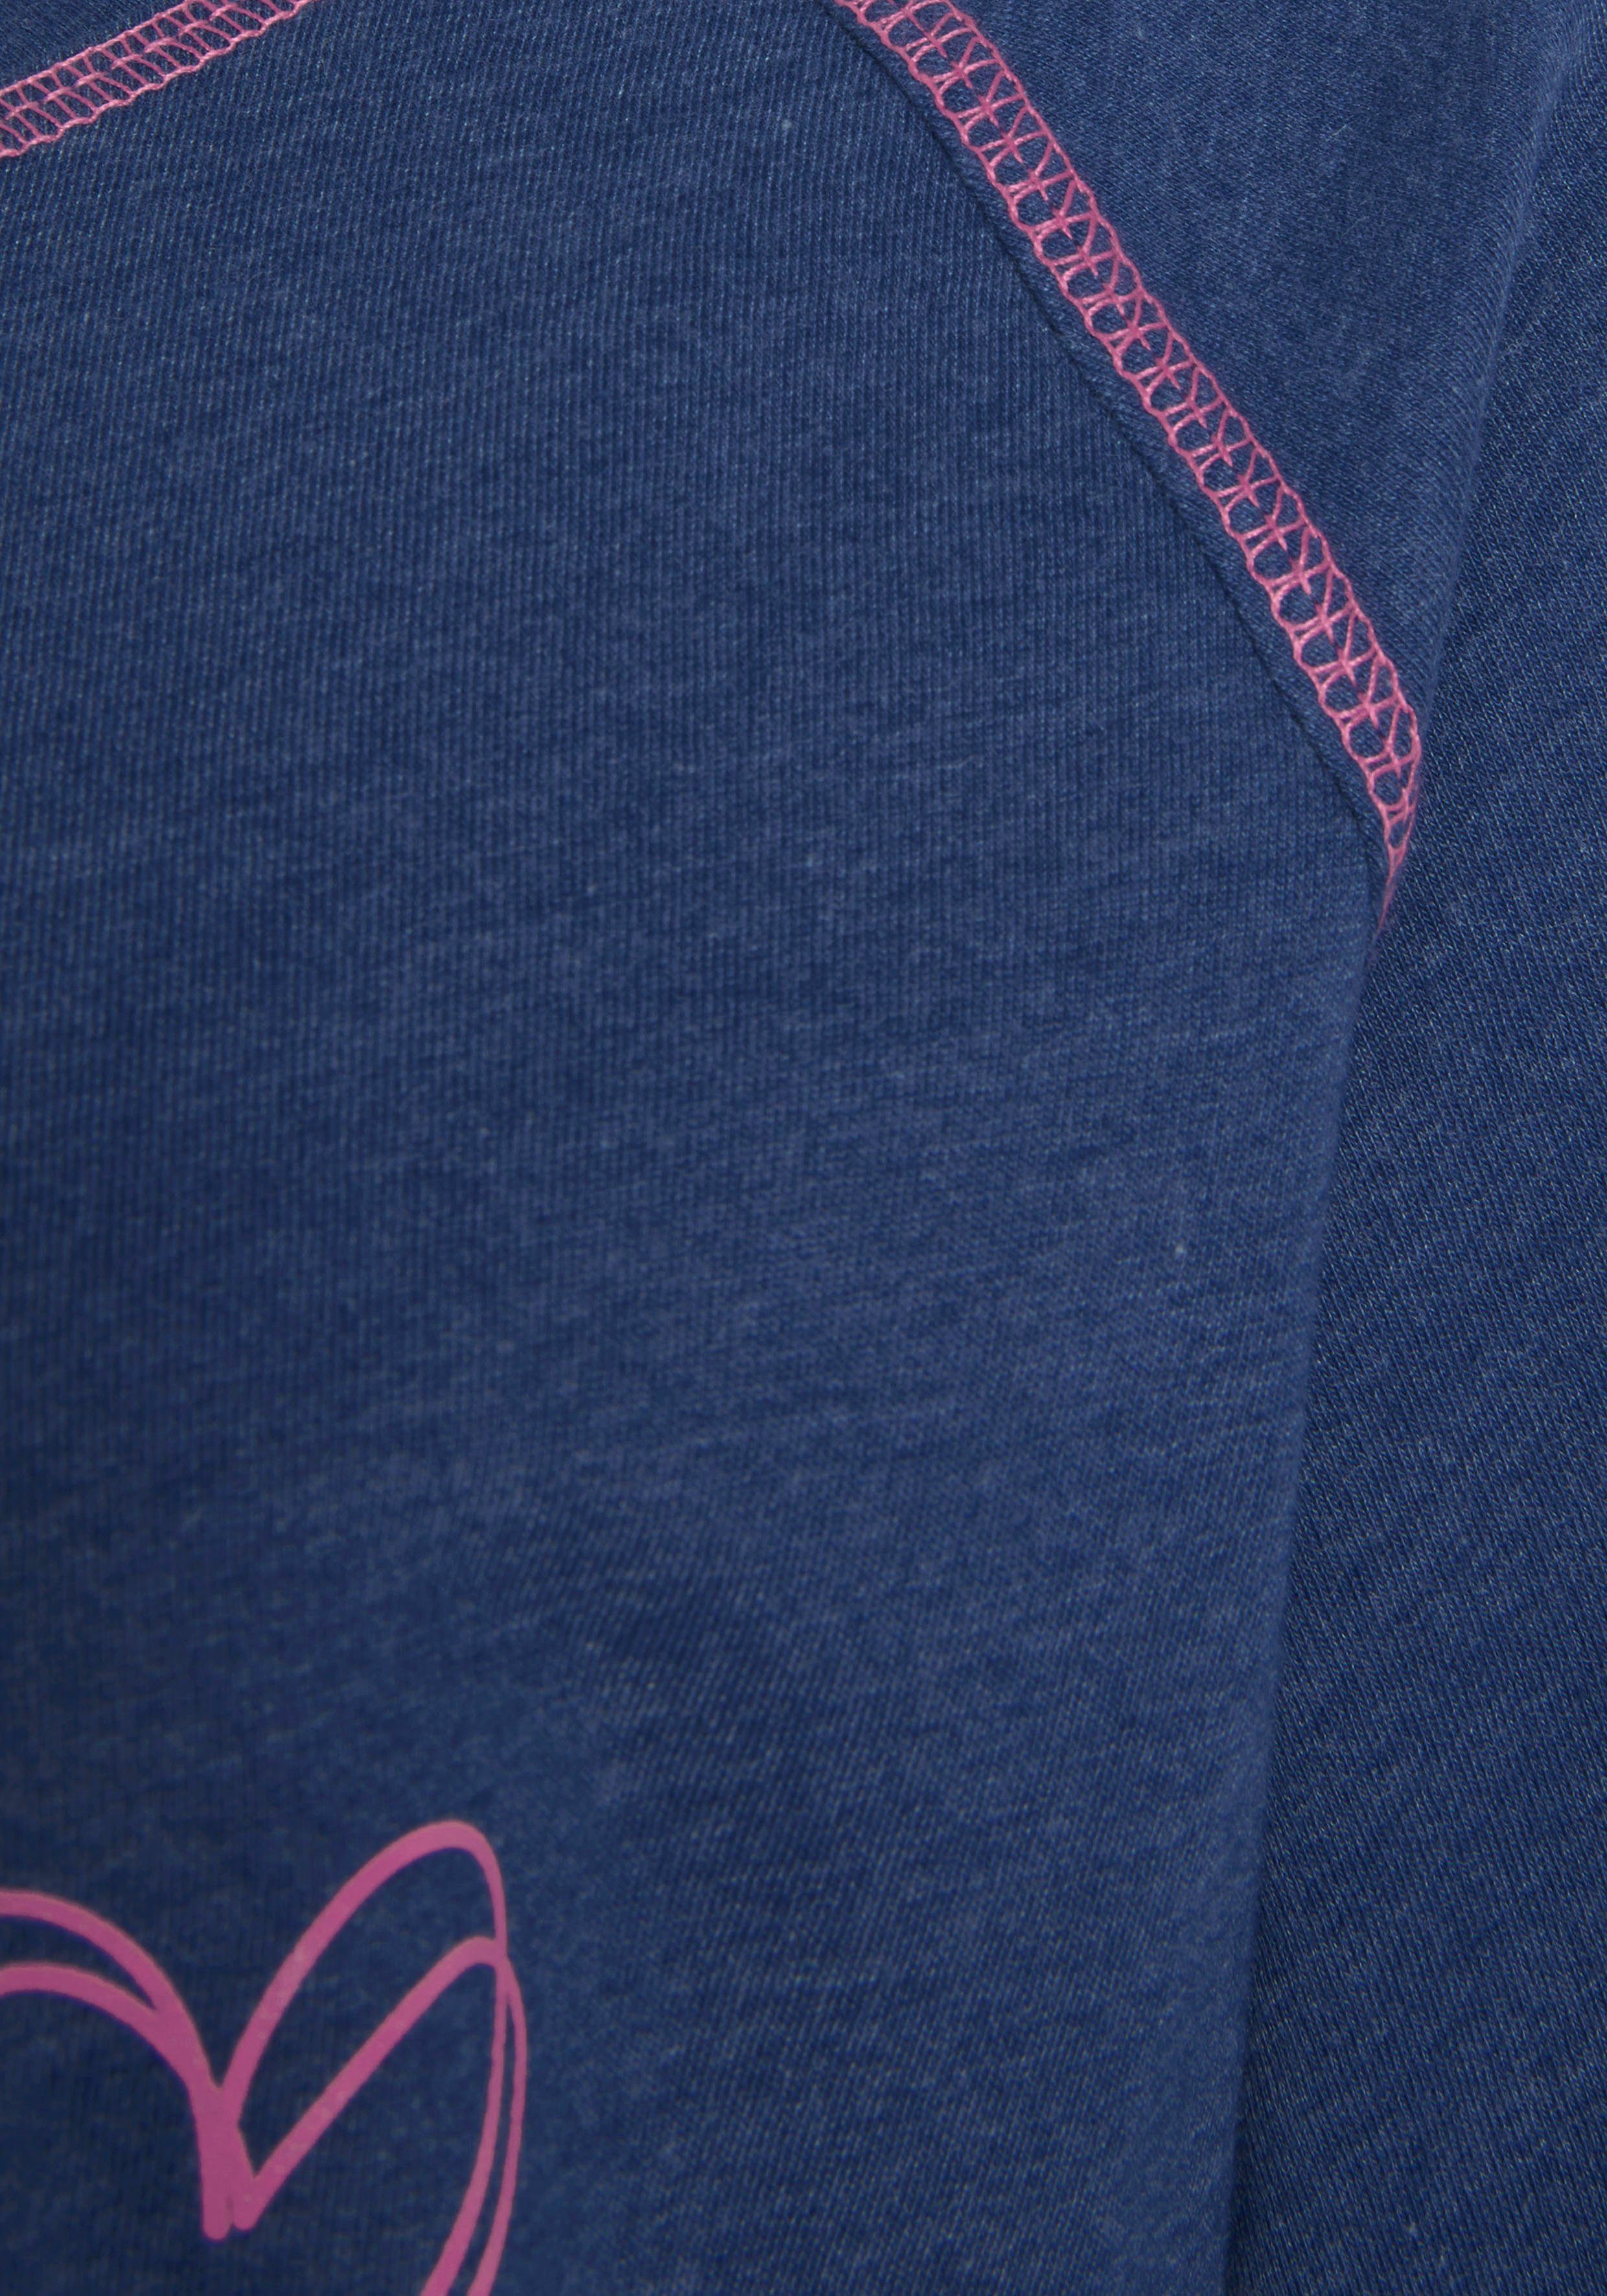 jeansblau/neon-pink Nachthemd (1-tlg) dekorativen Vivance Dreams mit Flatlock-Nähten in Neonfarben